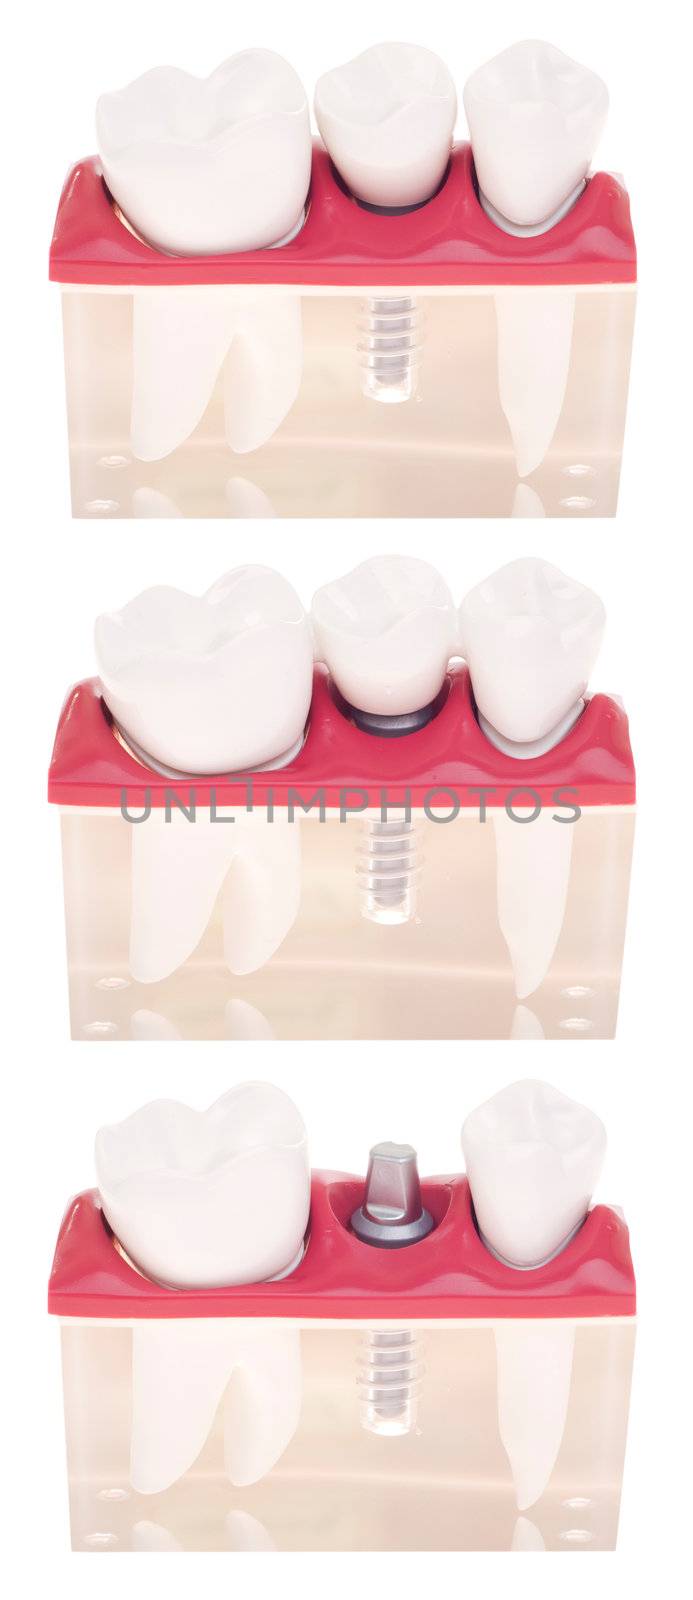 Implant dental model by luissantos84